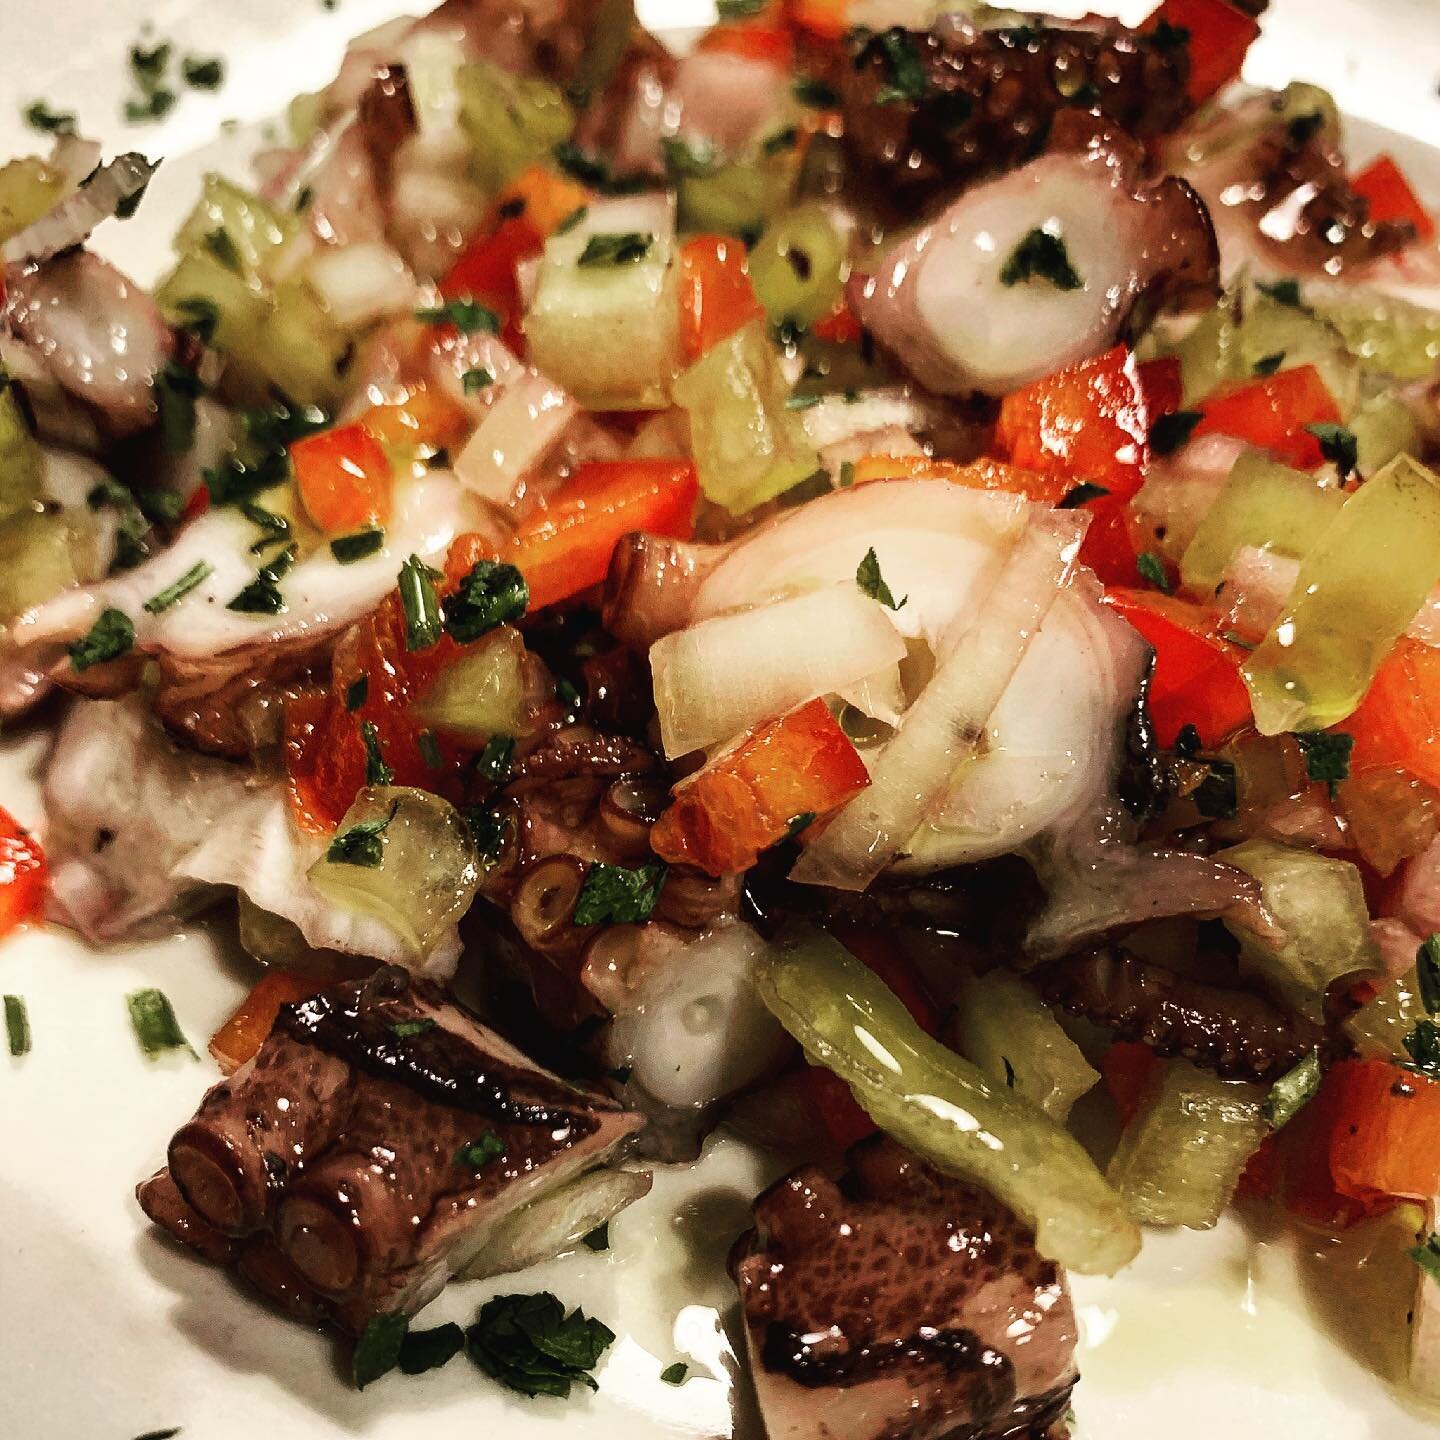 Pulpo a la vinagreta is back! #pulpo #colddishesforhotdays #salad #octopus #octopussalad